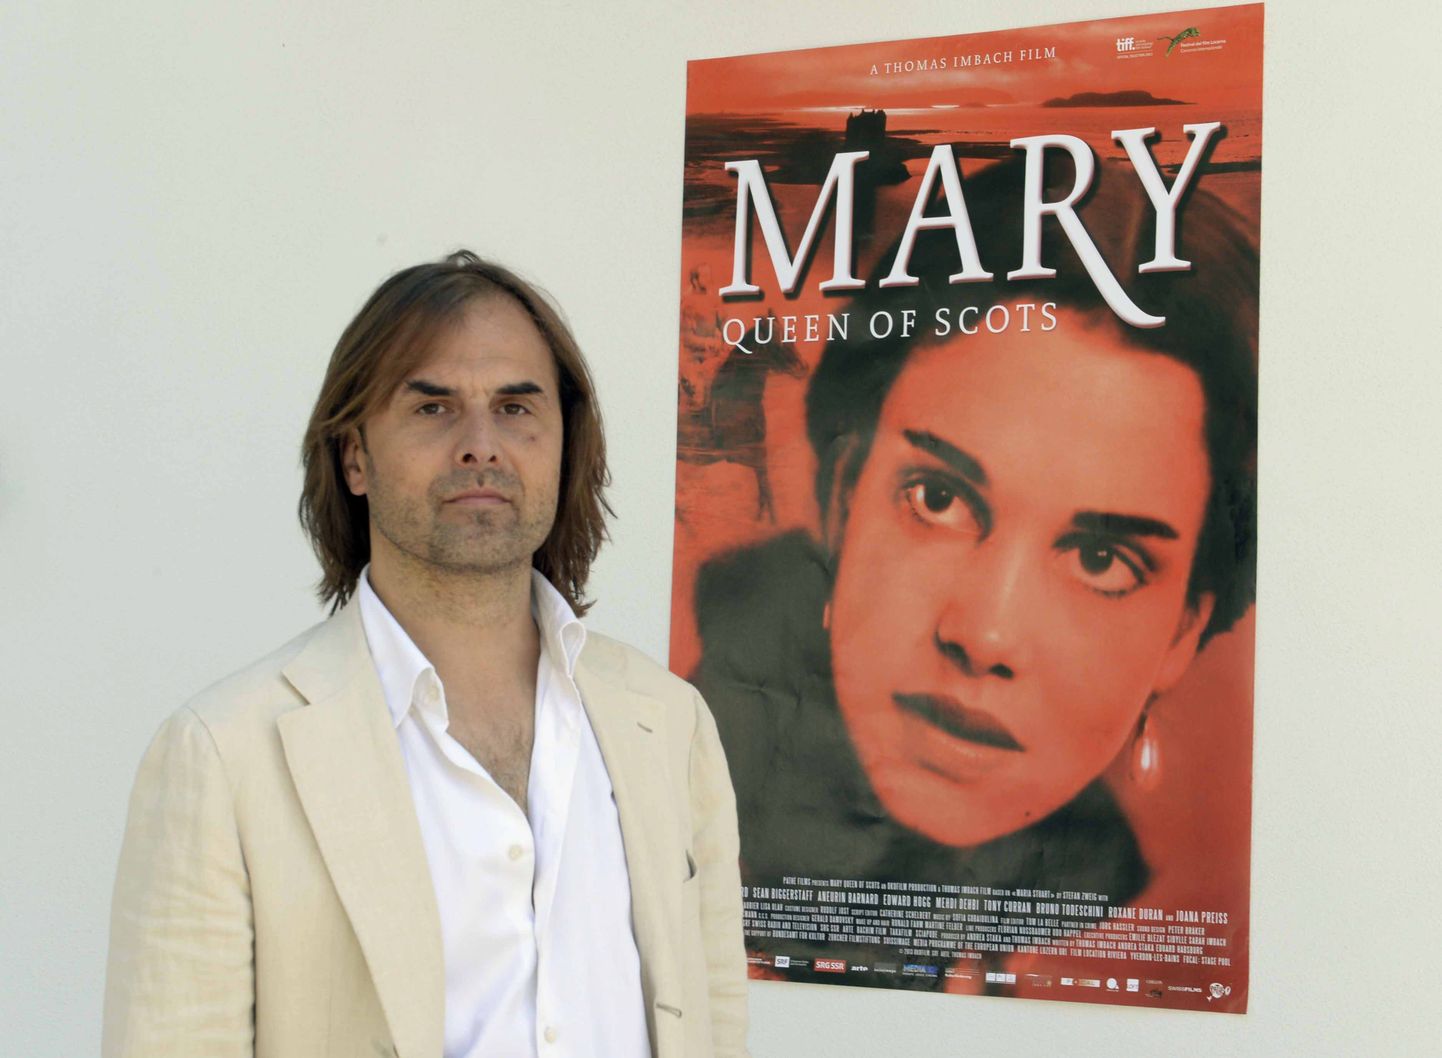 Režissöör Thomas Imbach ja tema filmi «Mary, Queen of Scots» plakat